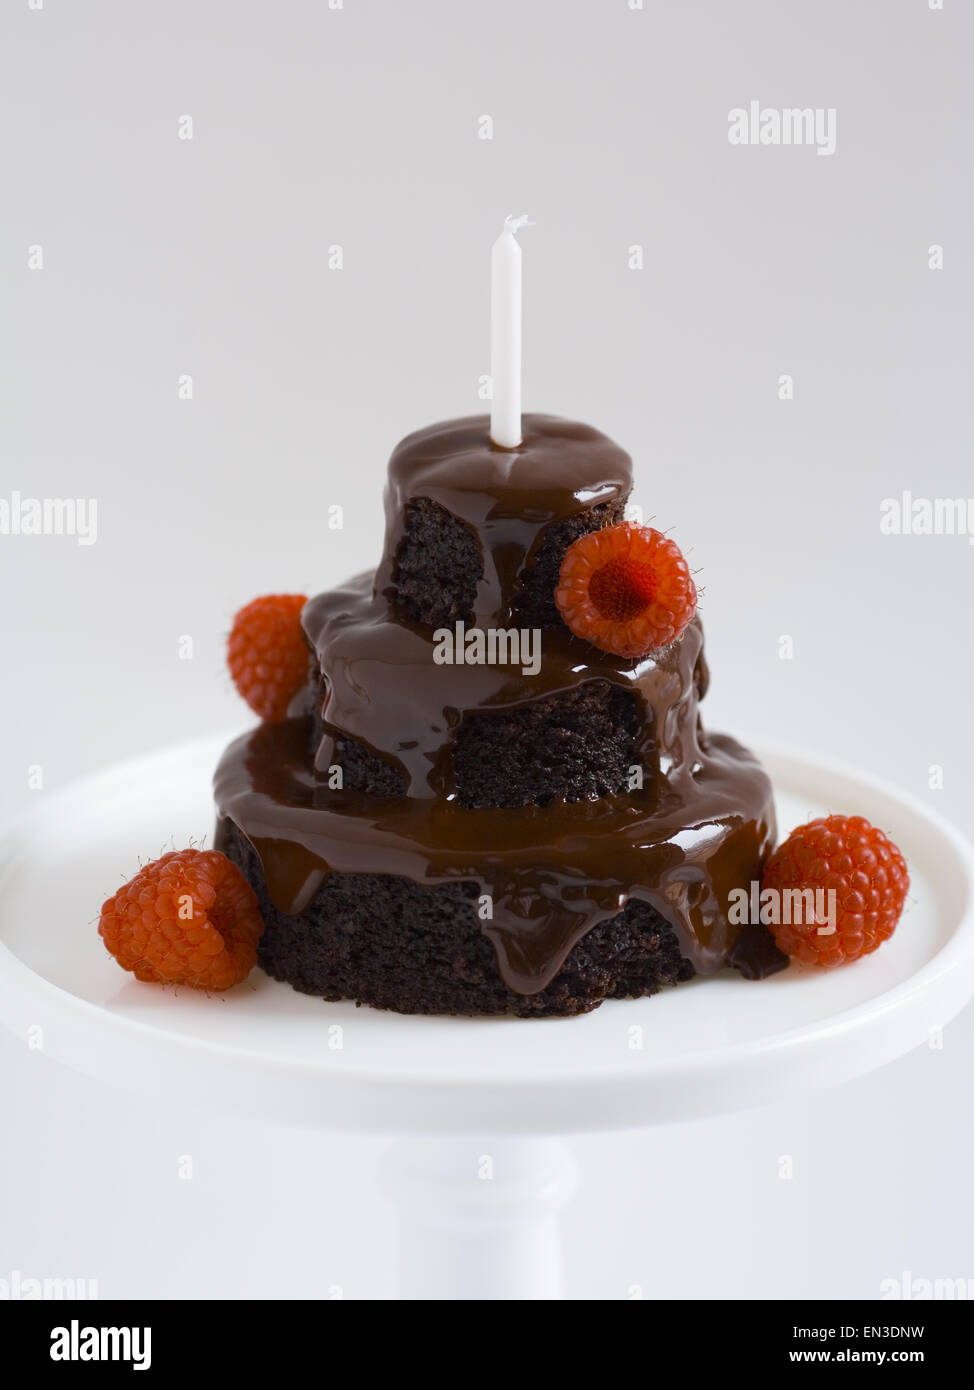 Chocolate birthday cake with raspberries and candle Stock Photo